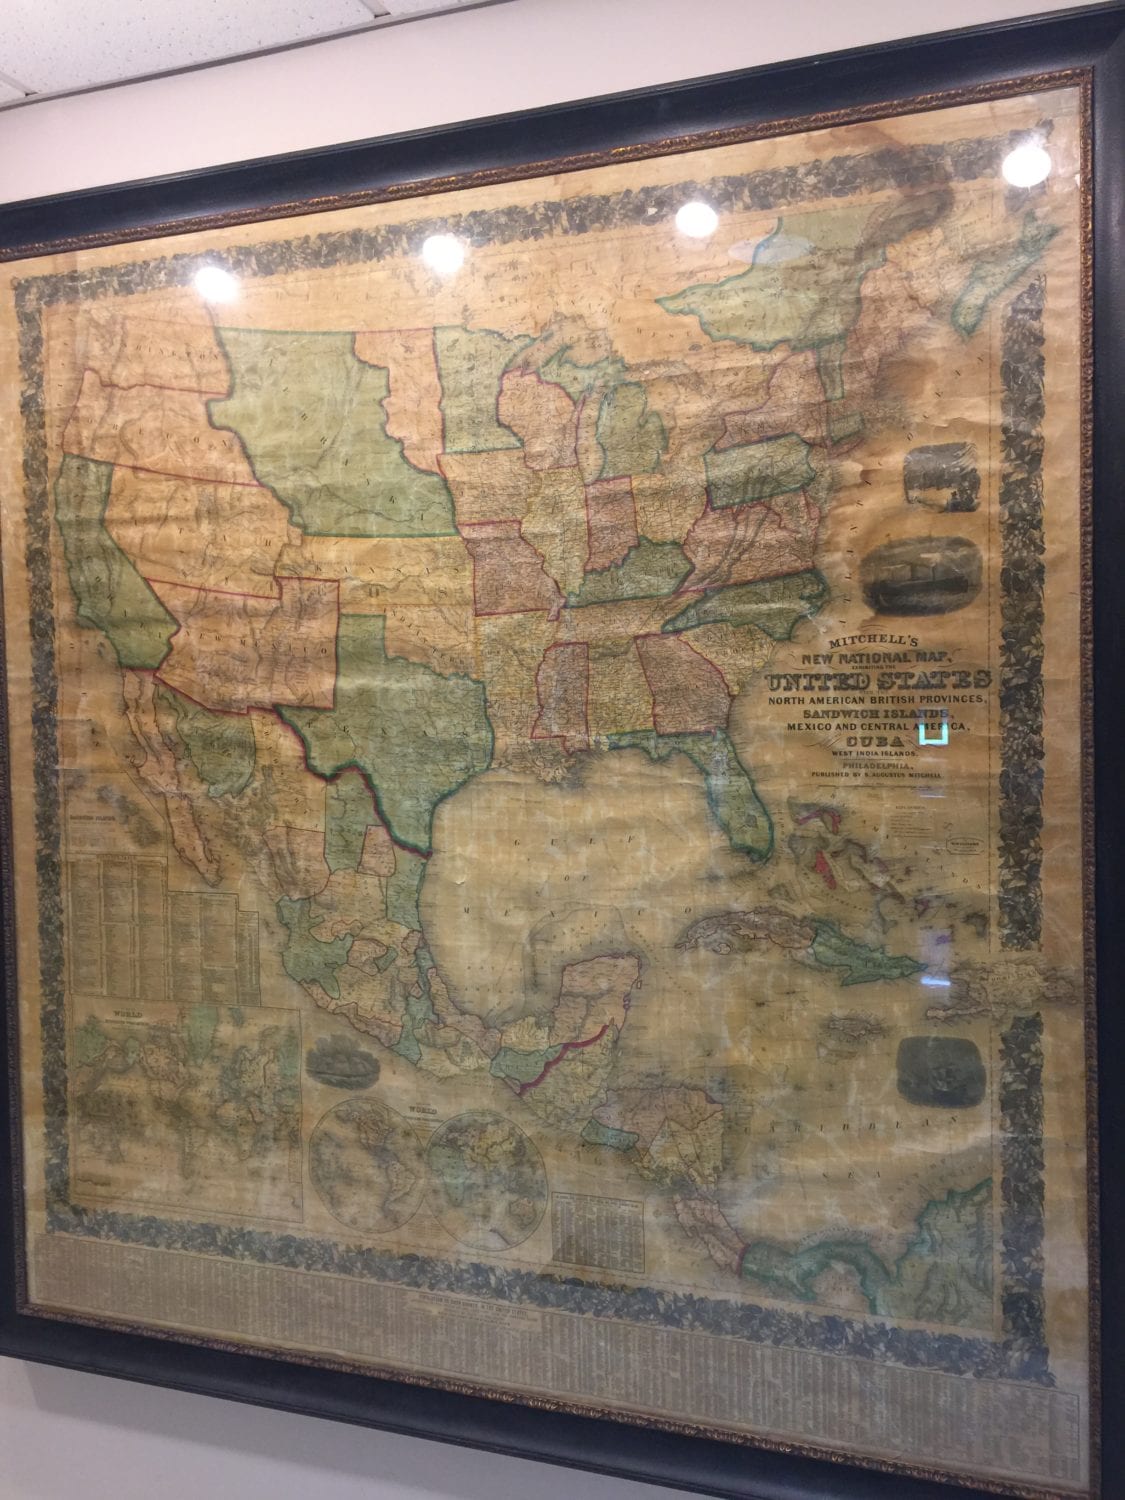 Dedication of United States Civil War-era map on Oct. 4